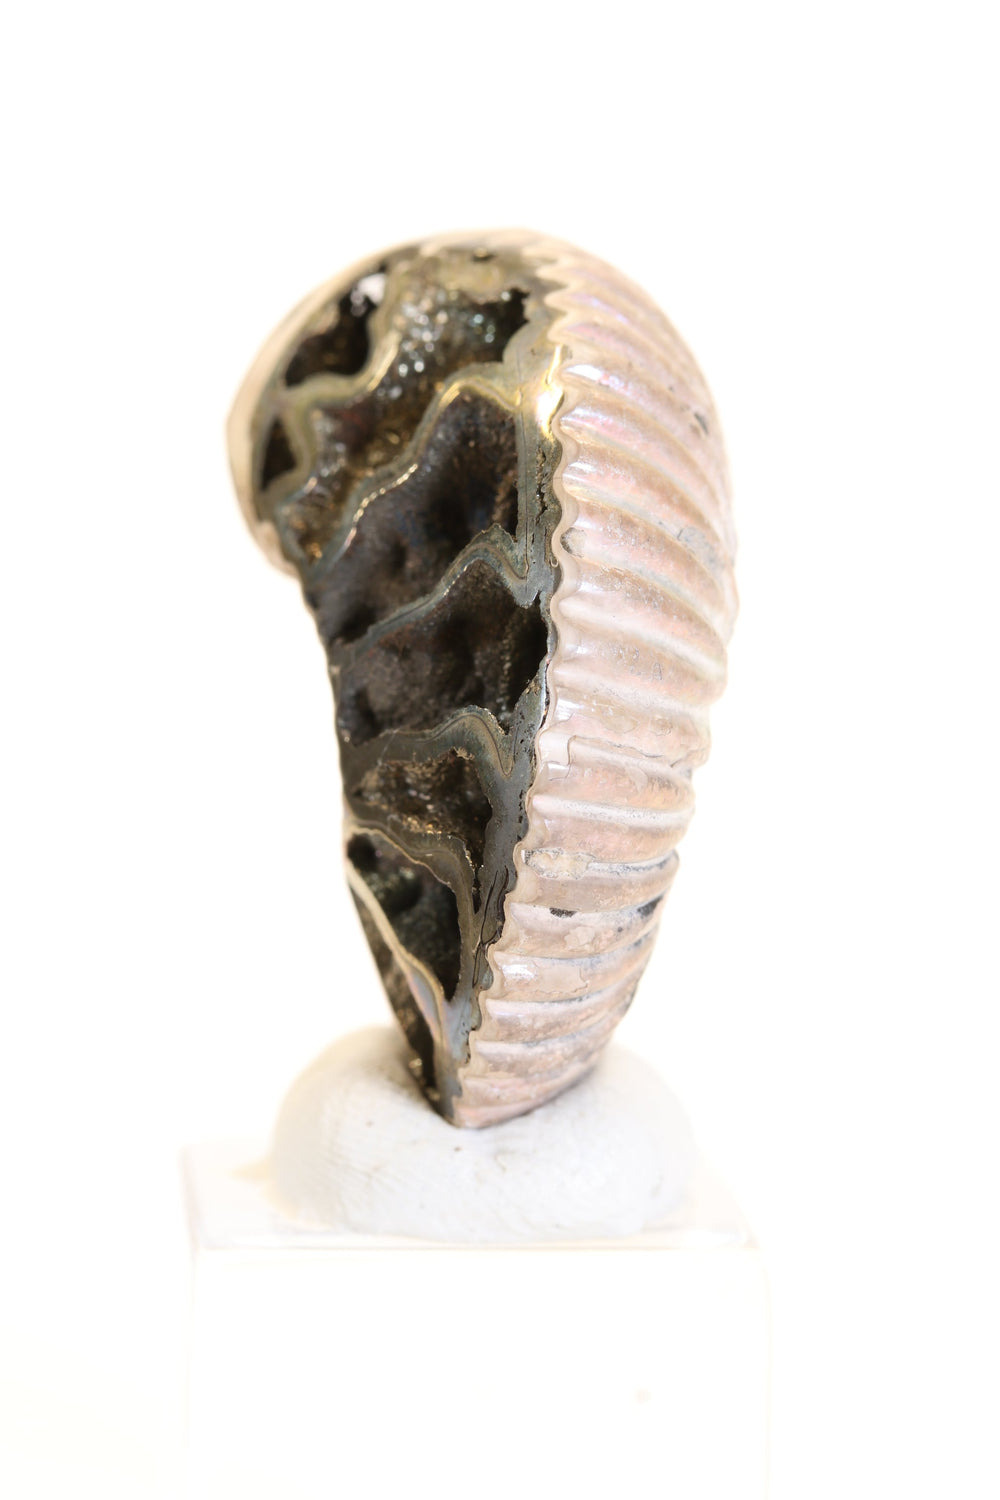 Pyritized Ammonite Fossil TD1787